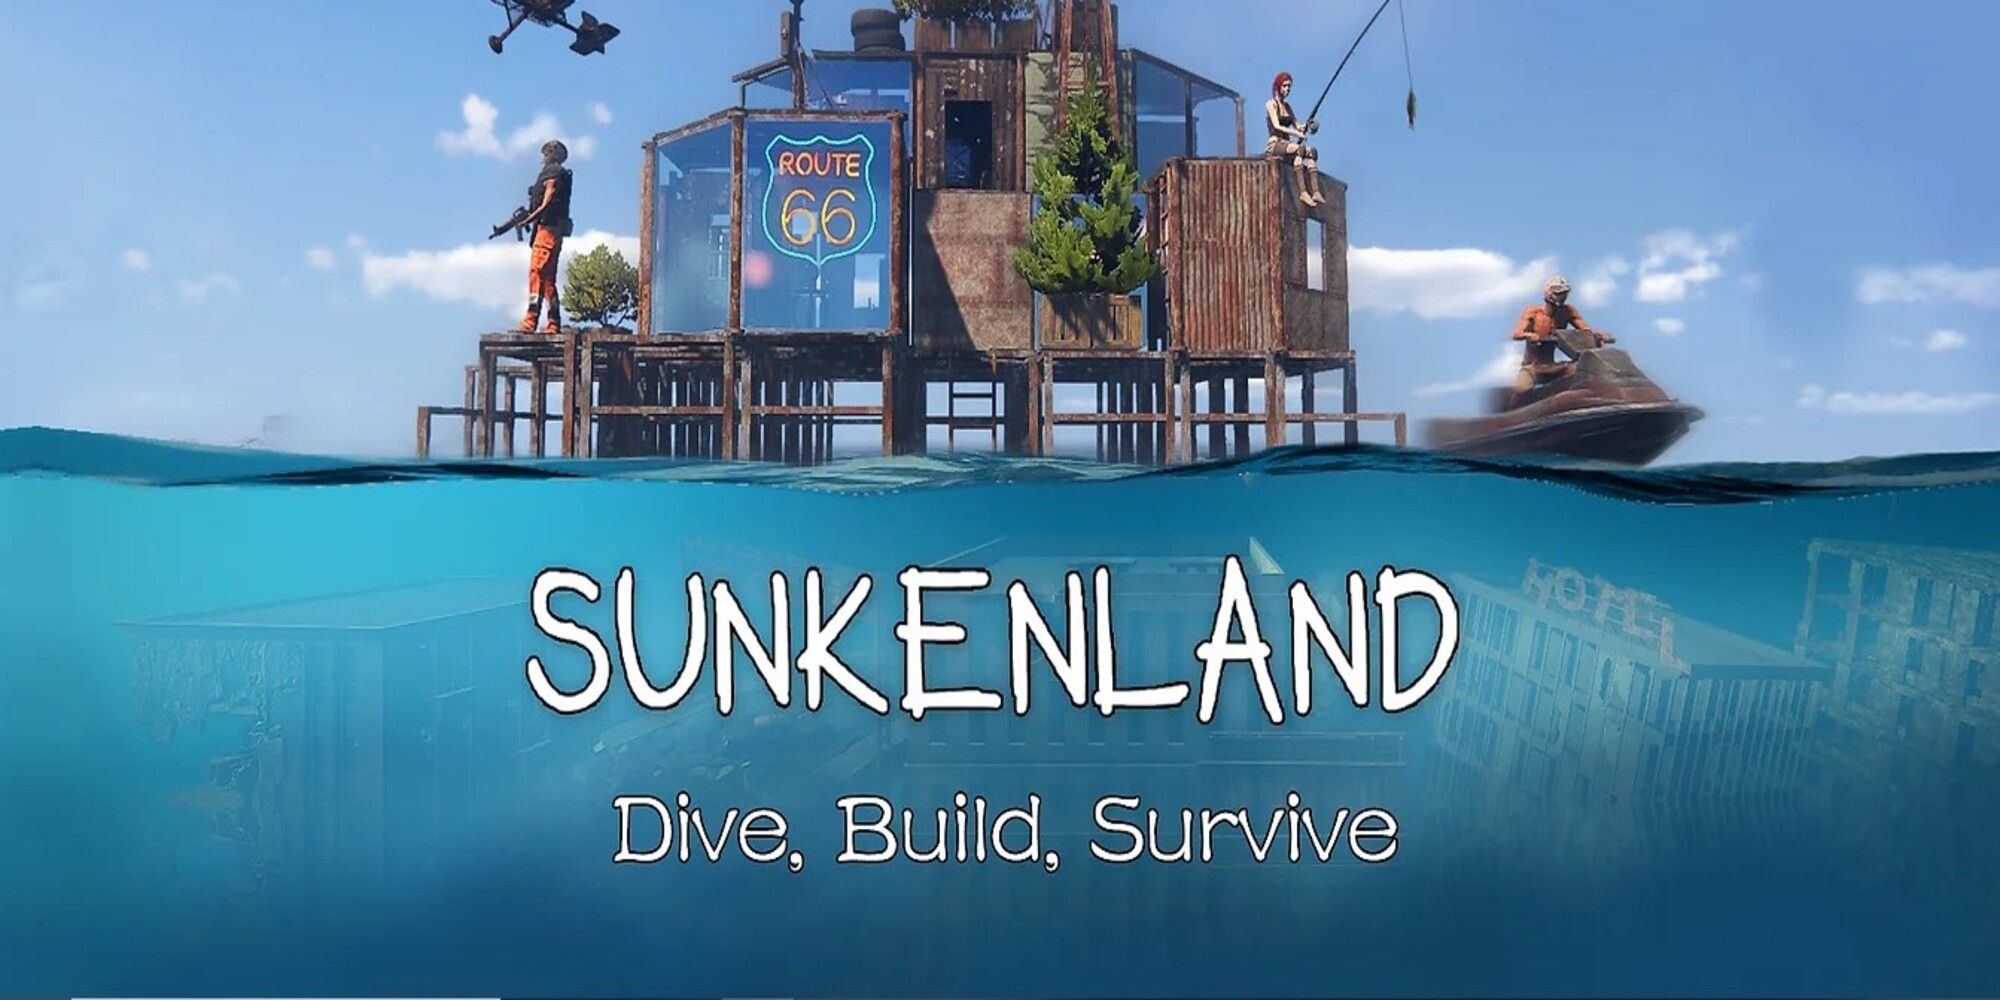 Sunkenland feature image